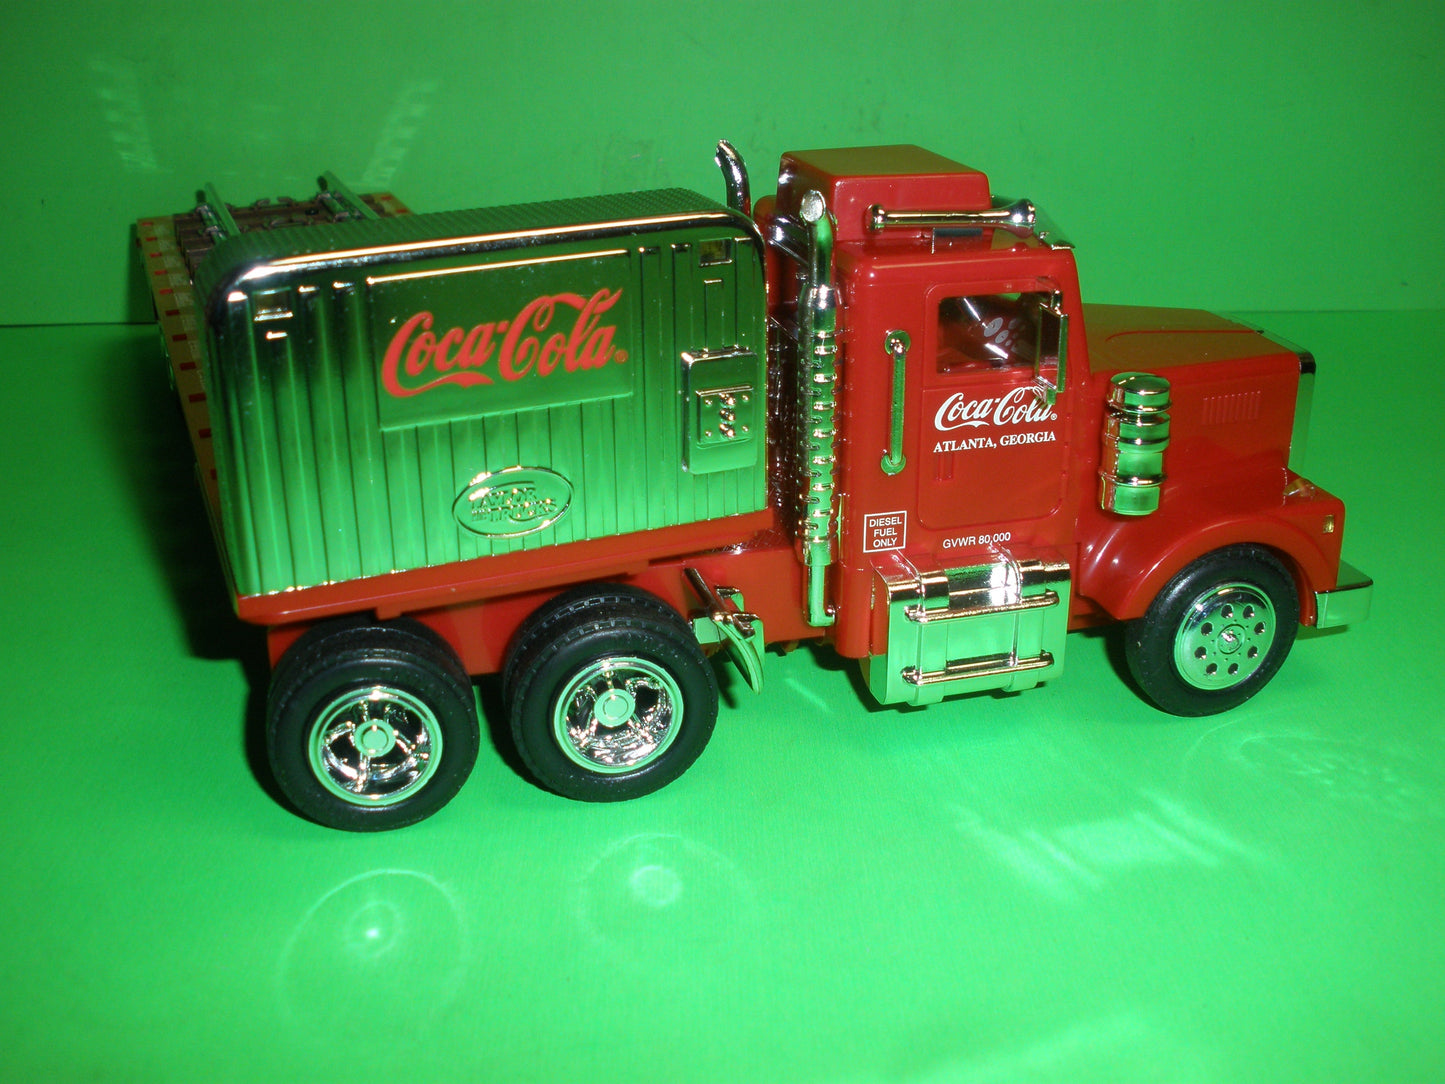 2001 Coca-Cola Flatbed Truck & Train Caboose Sampler